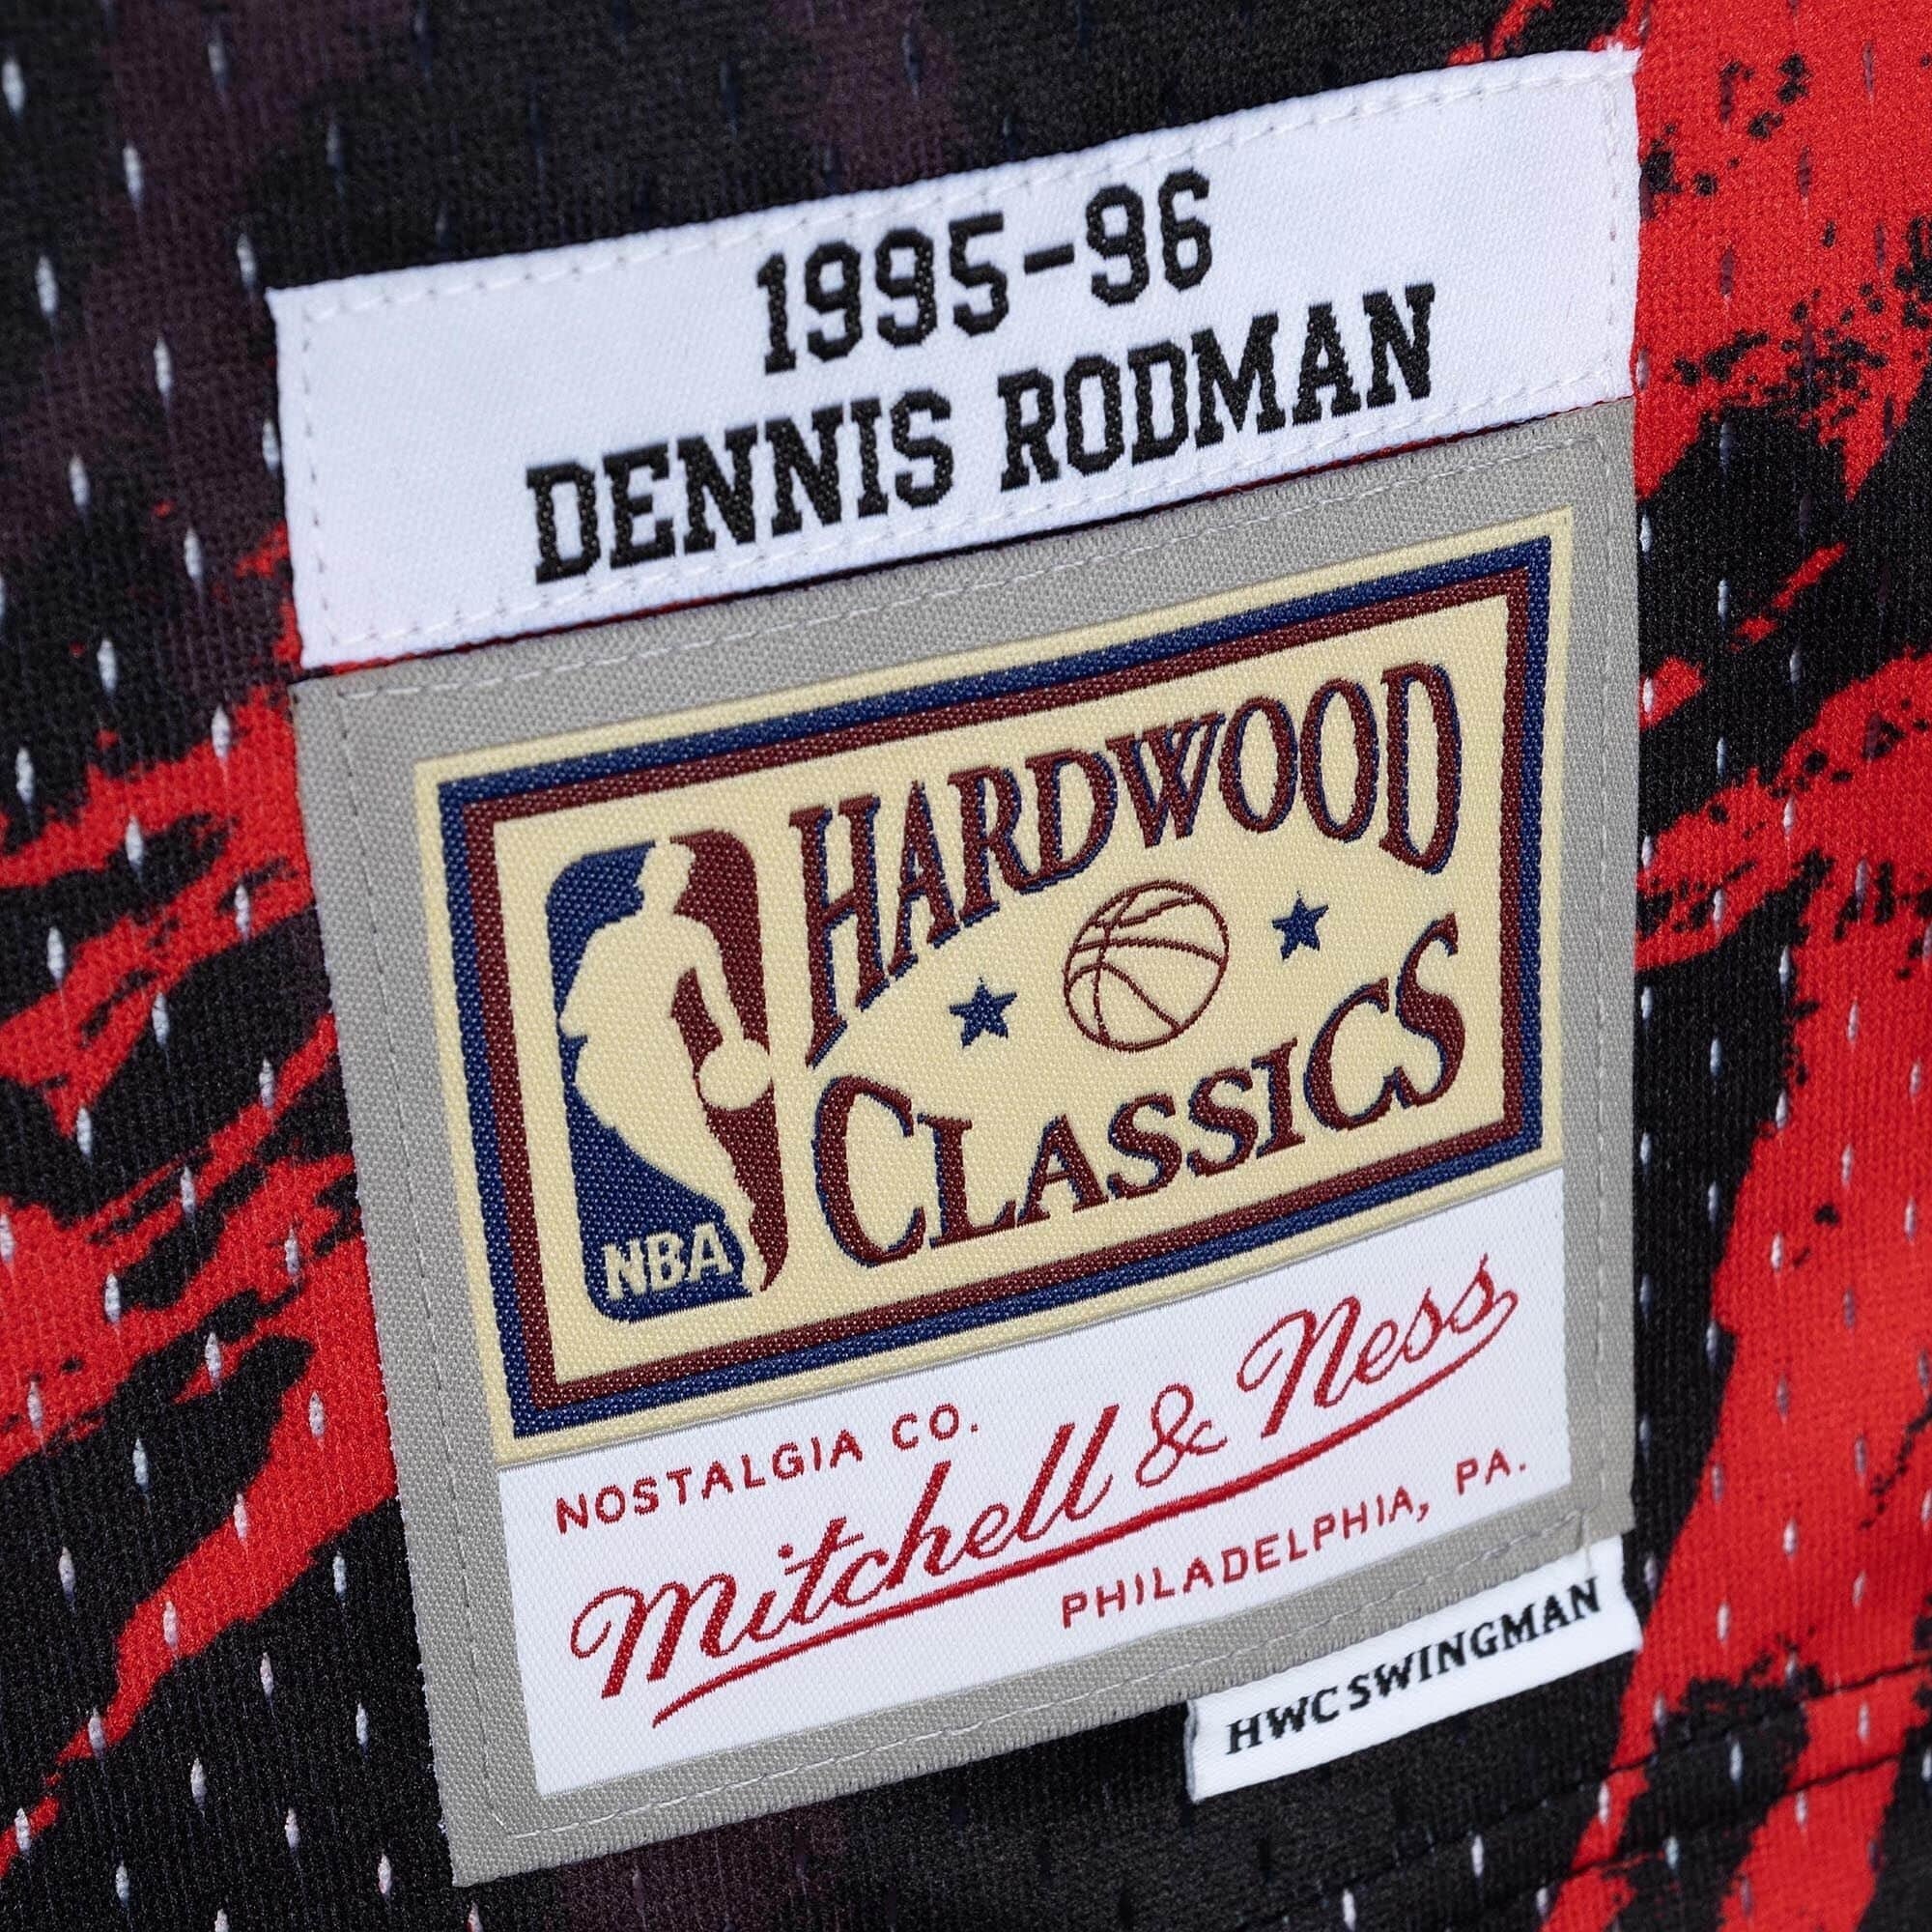 Chicago Bulls Dennis Rodman 97-98 Swingman Jersey, Tees & Singlets